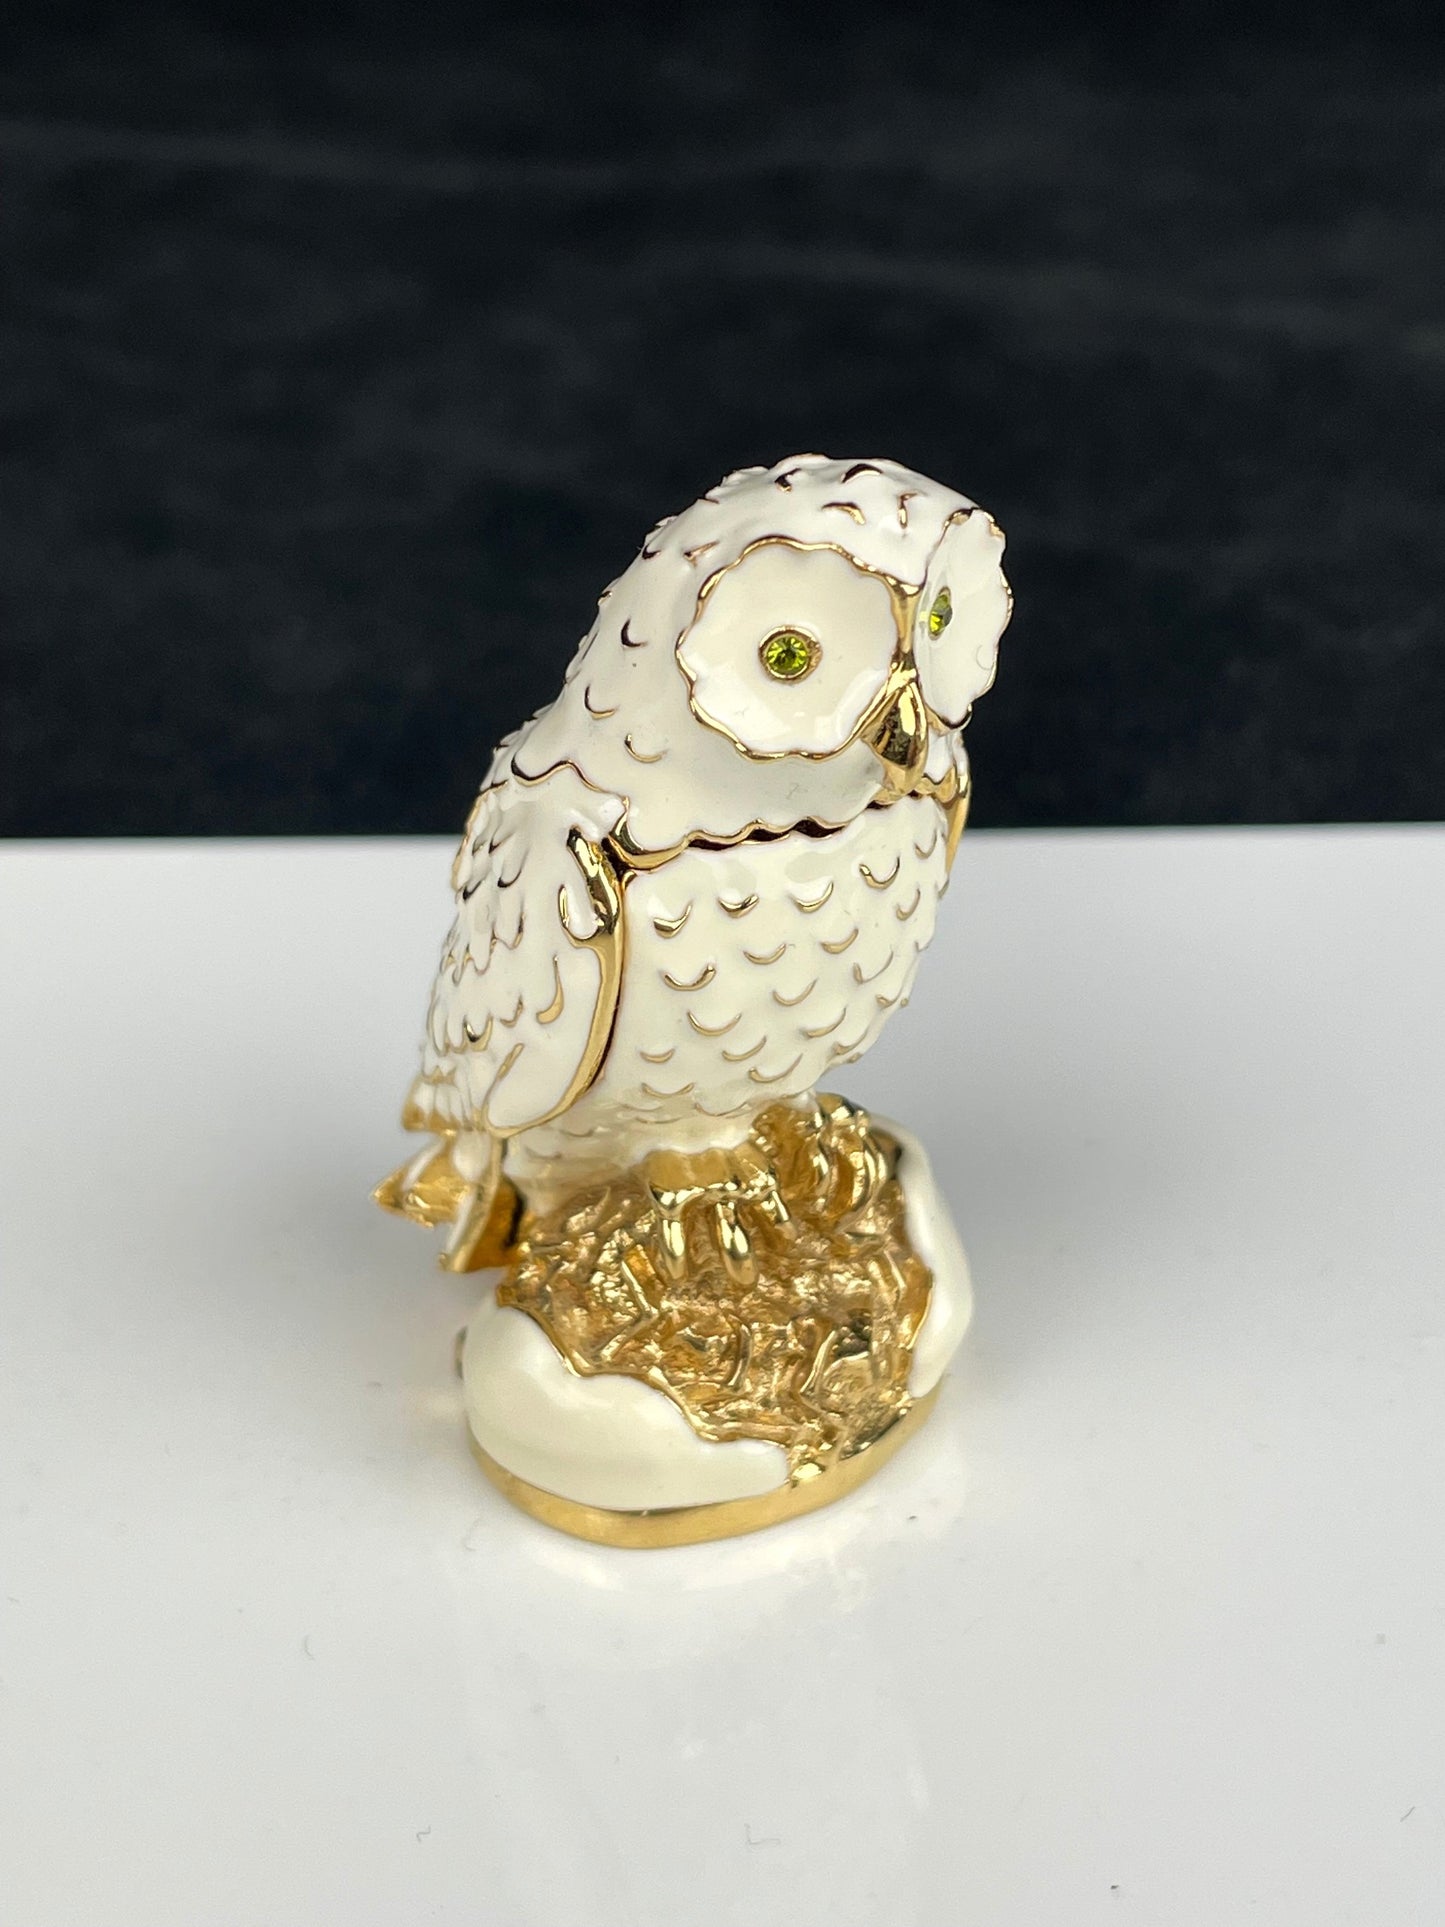 Estee Lauder 2005 "Beautiful" Solid Perfume Compact "Glistening Owl"